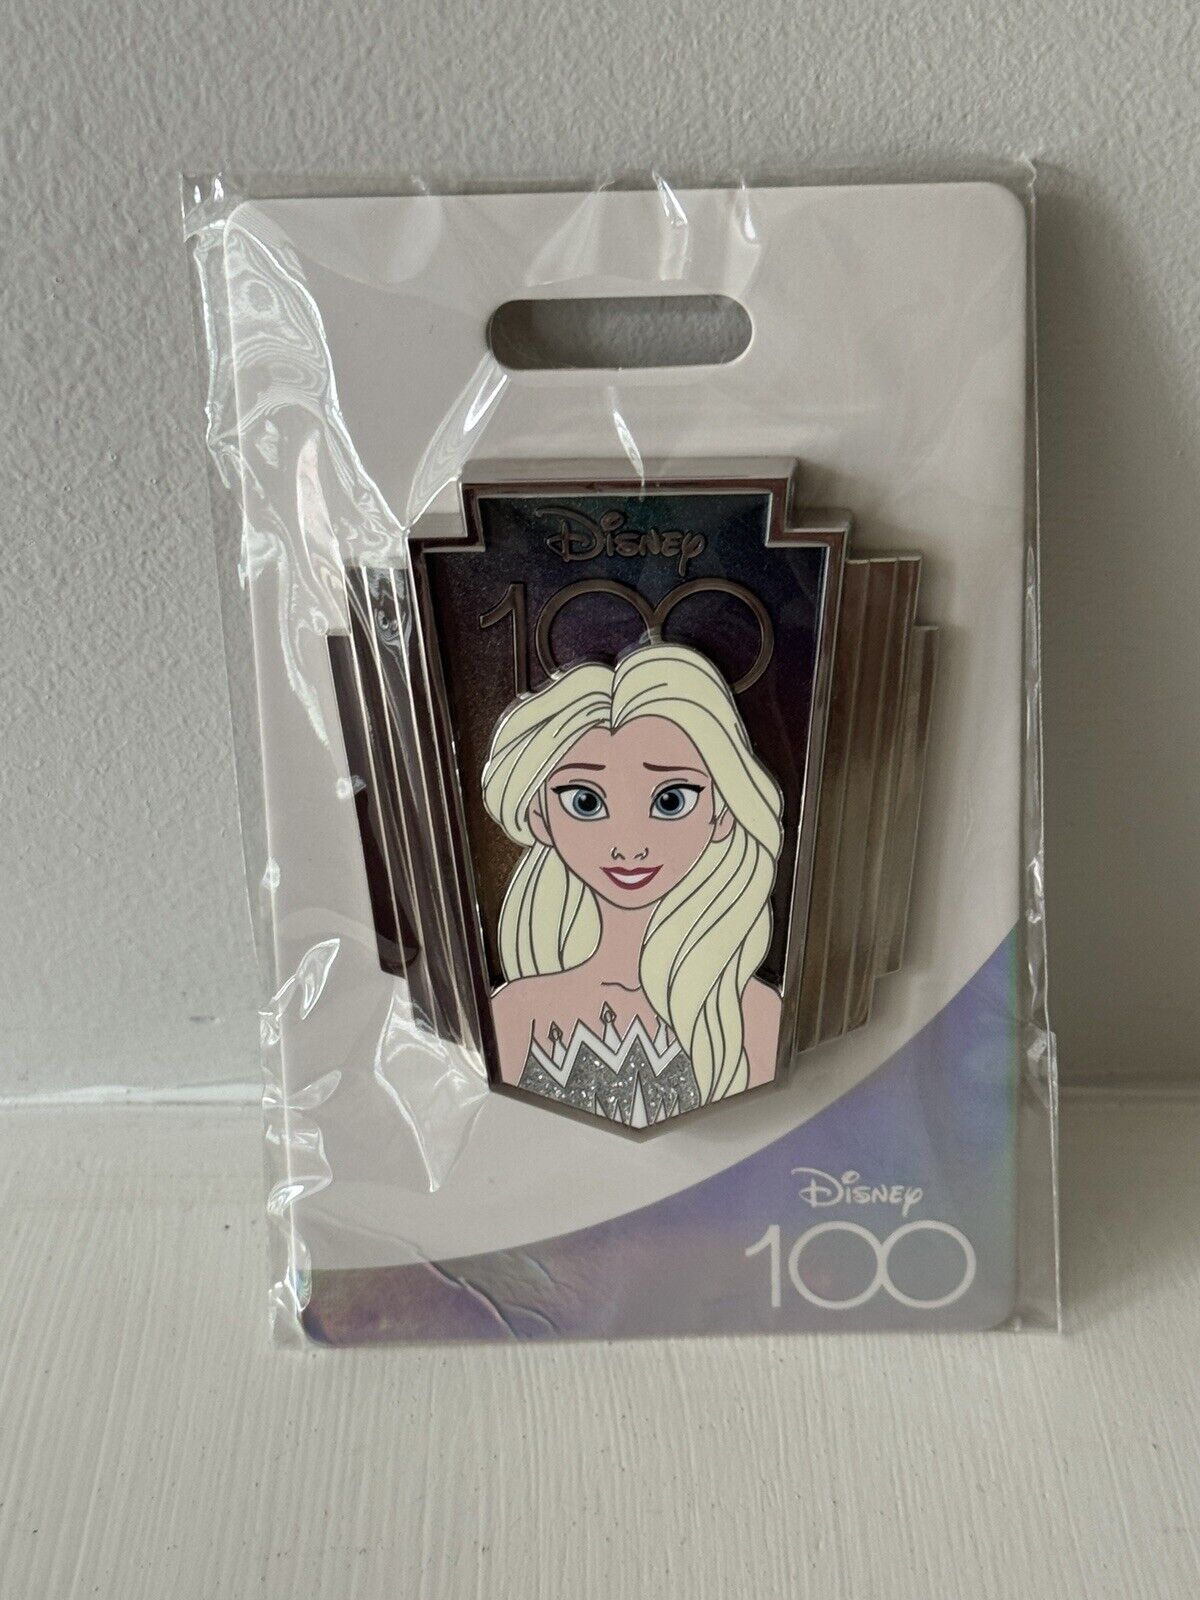 Disney Destination D23 100 Years of Animation WDI MOG LE 300 Pin Elsa